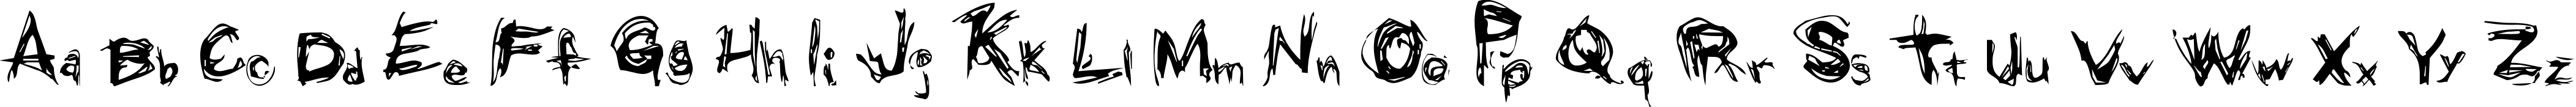 Пример написания английского алфавита шрифтом Grunge